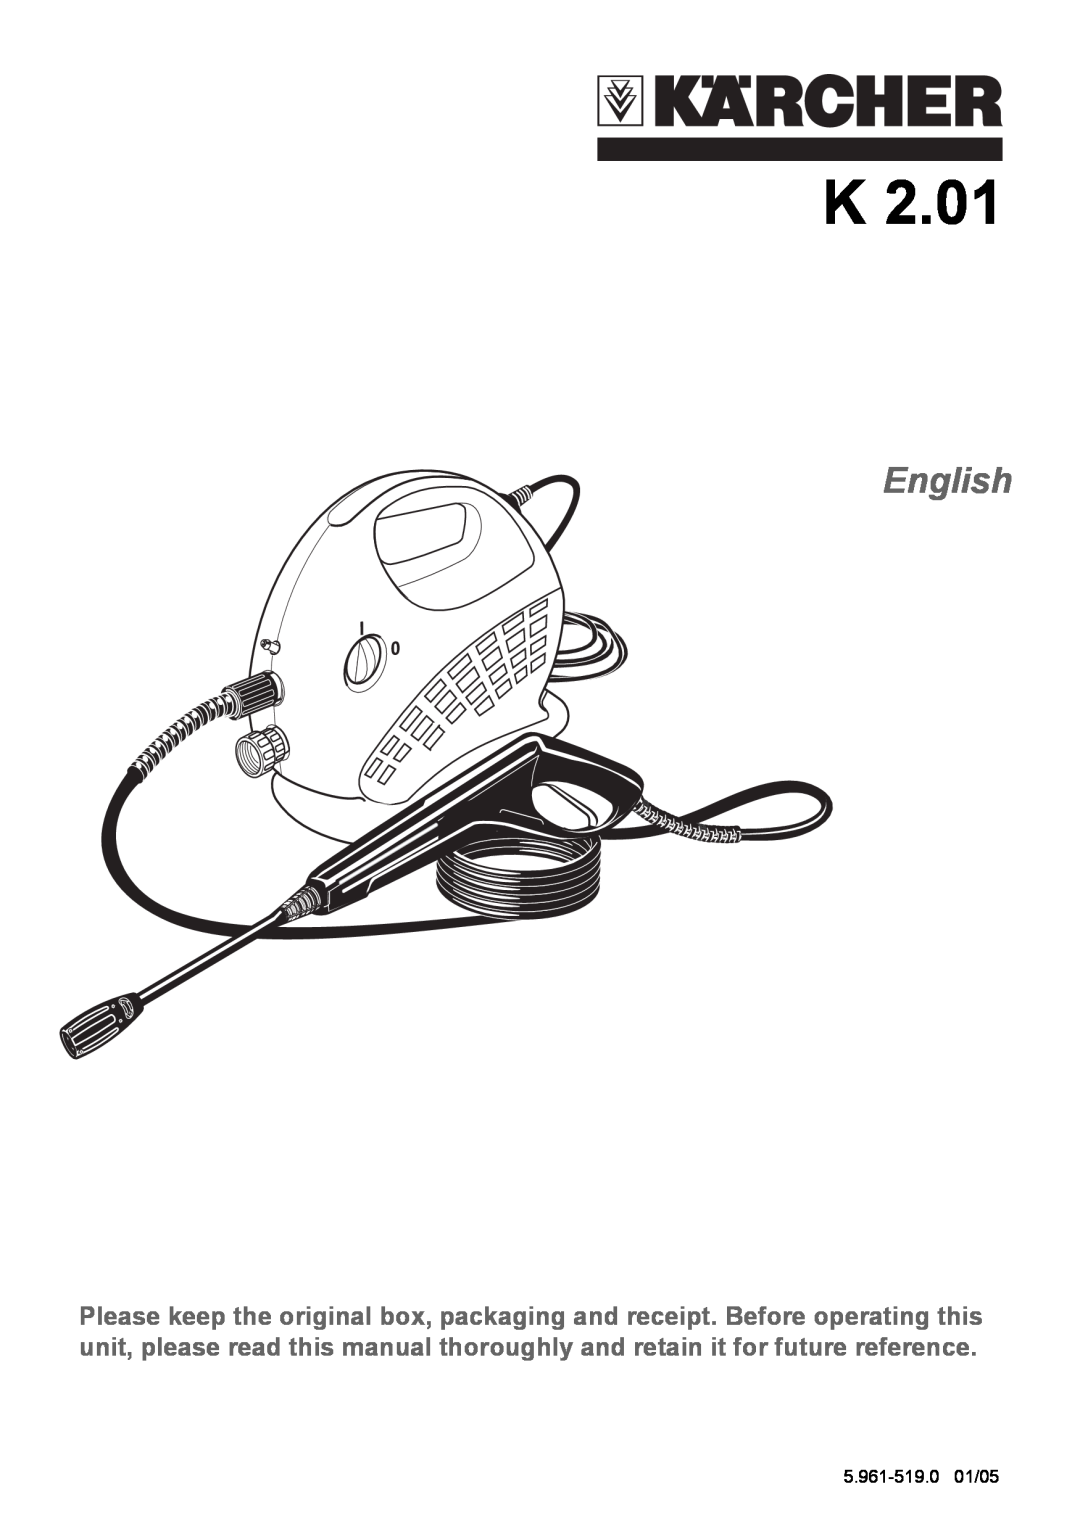 Karcher K 2.01 manual English, 5.961-519.001/05 